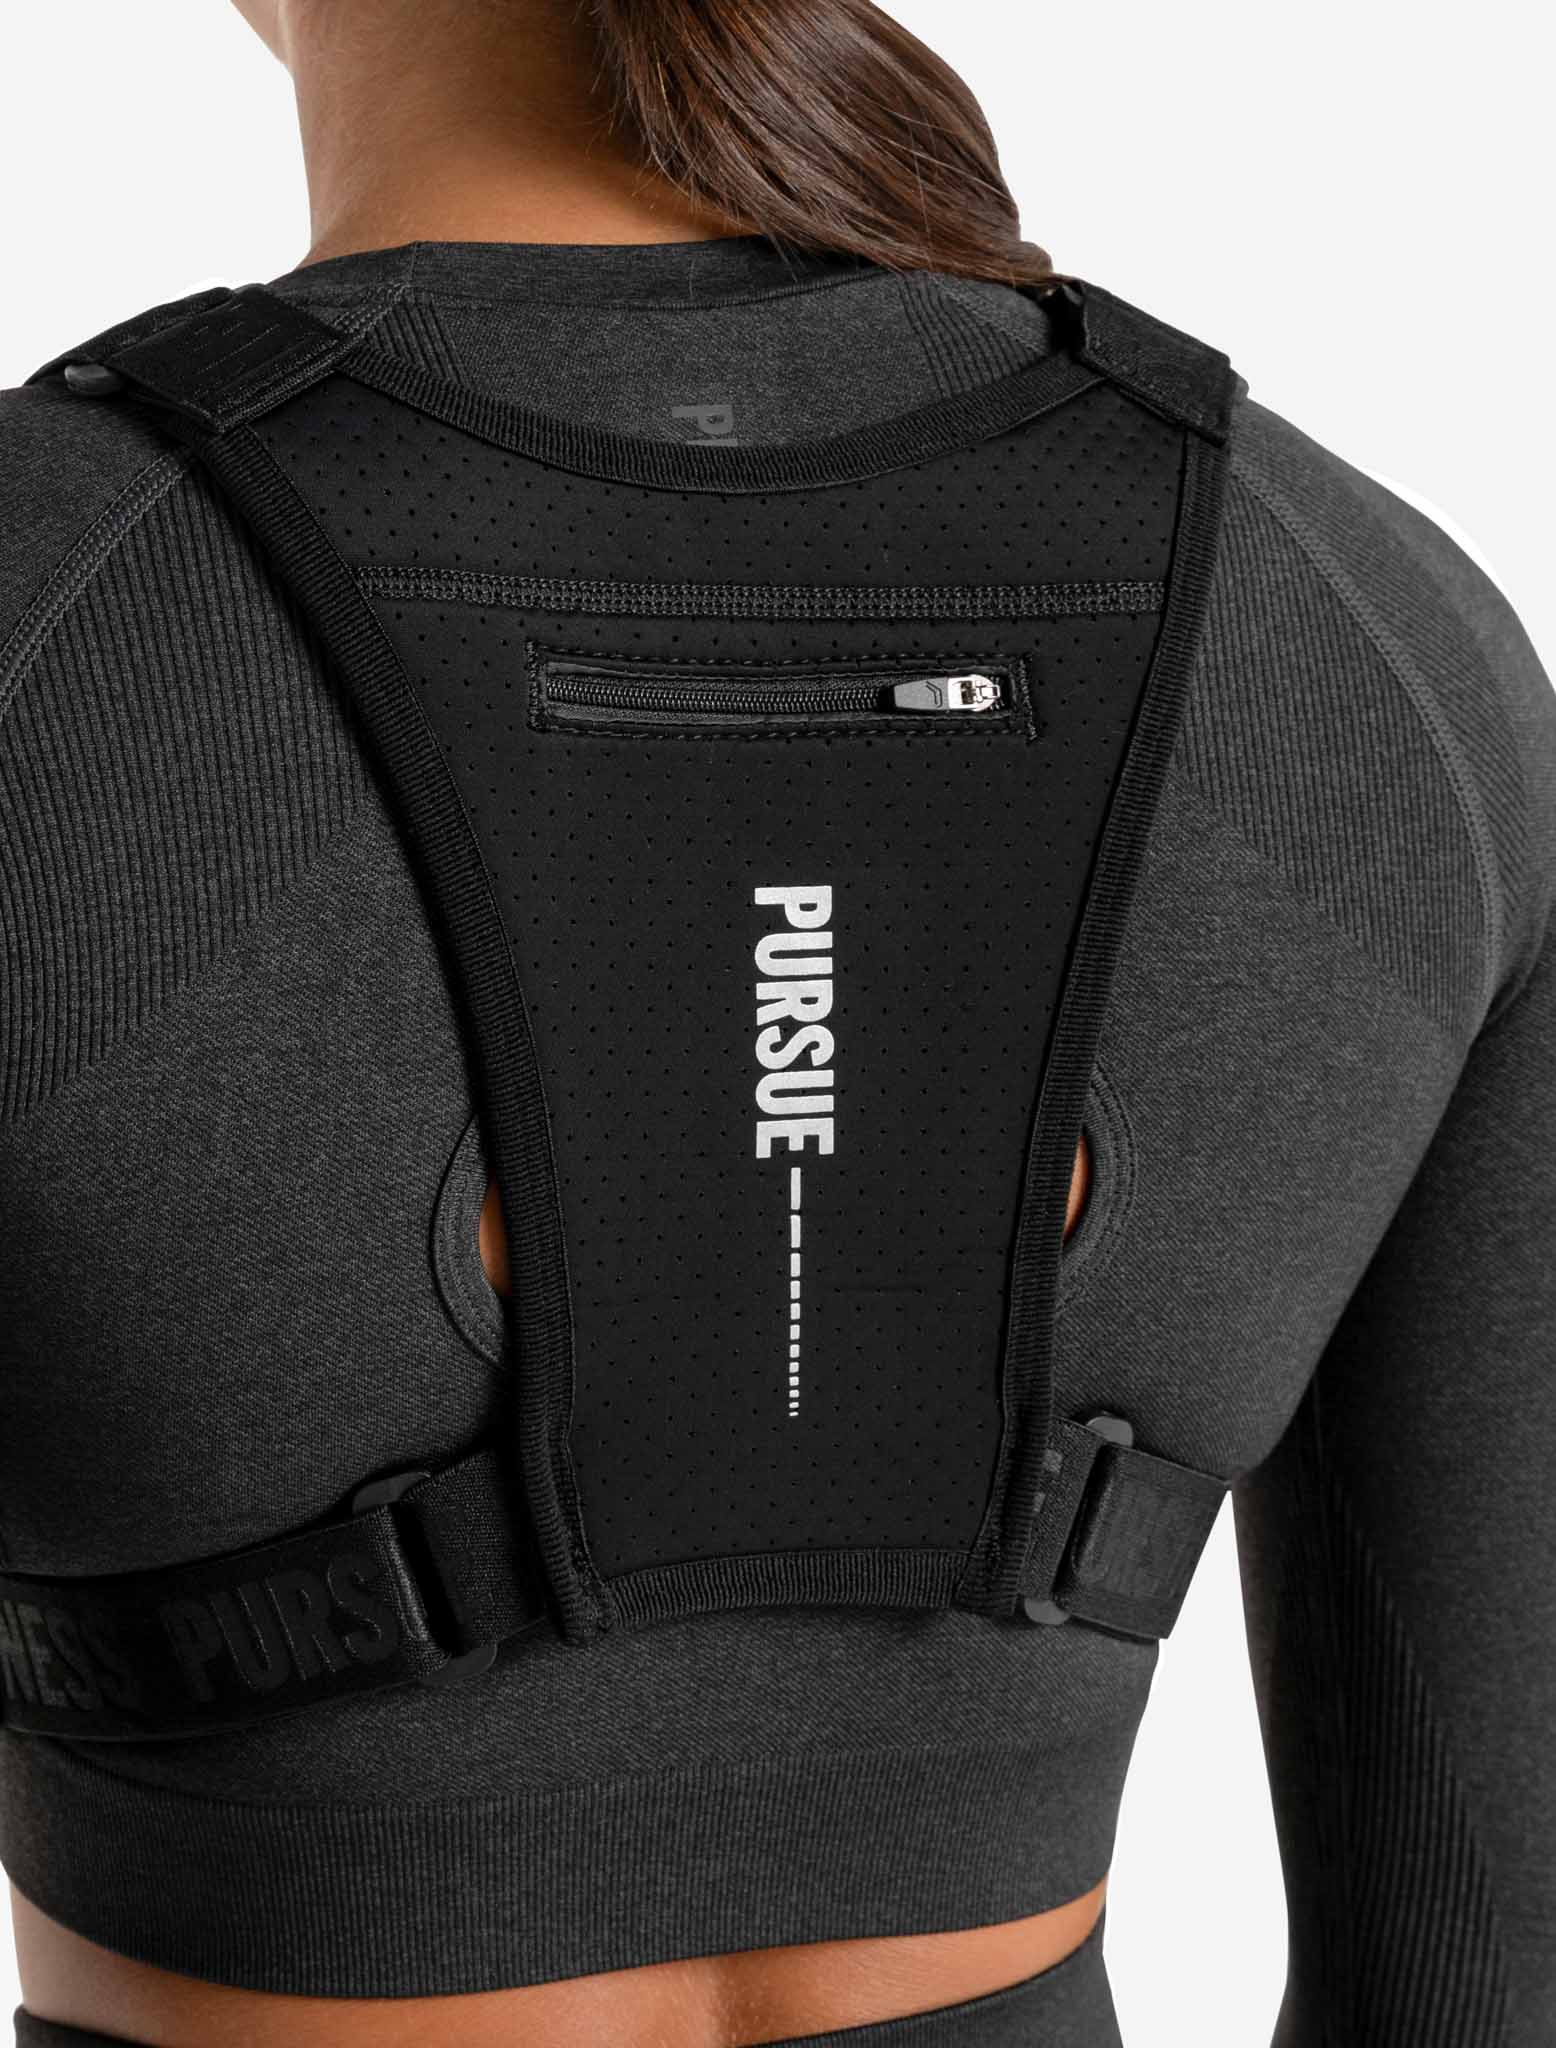 Accessories-Adjustable Training Vest / Black